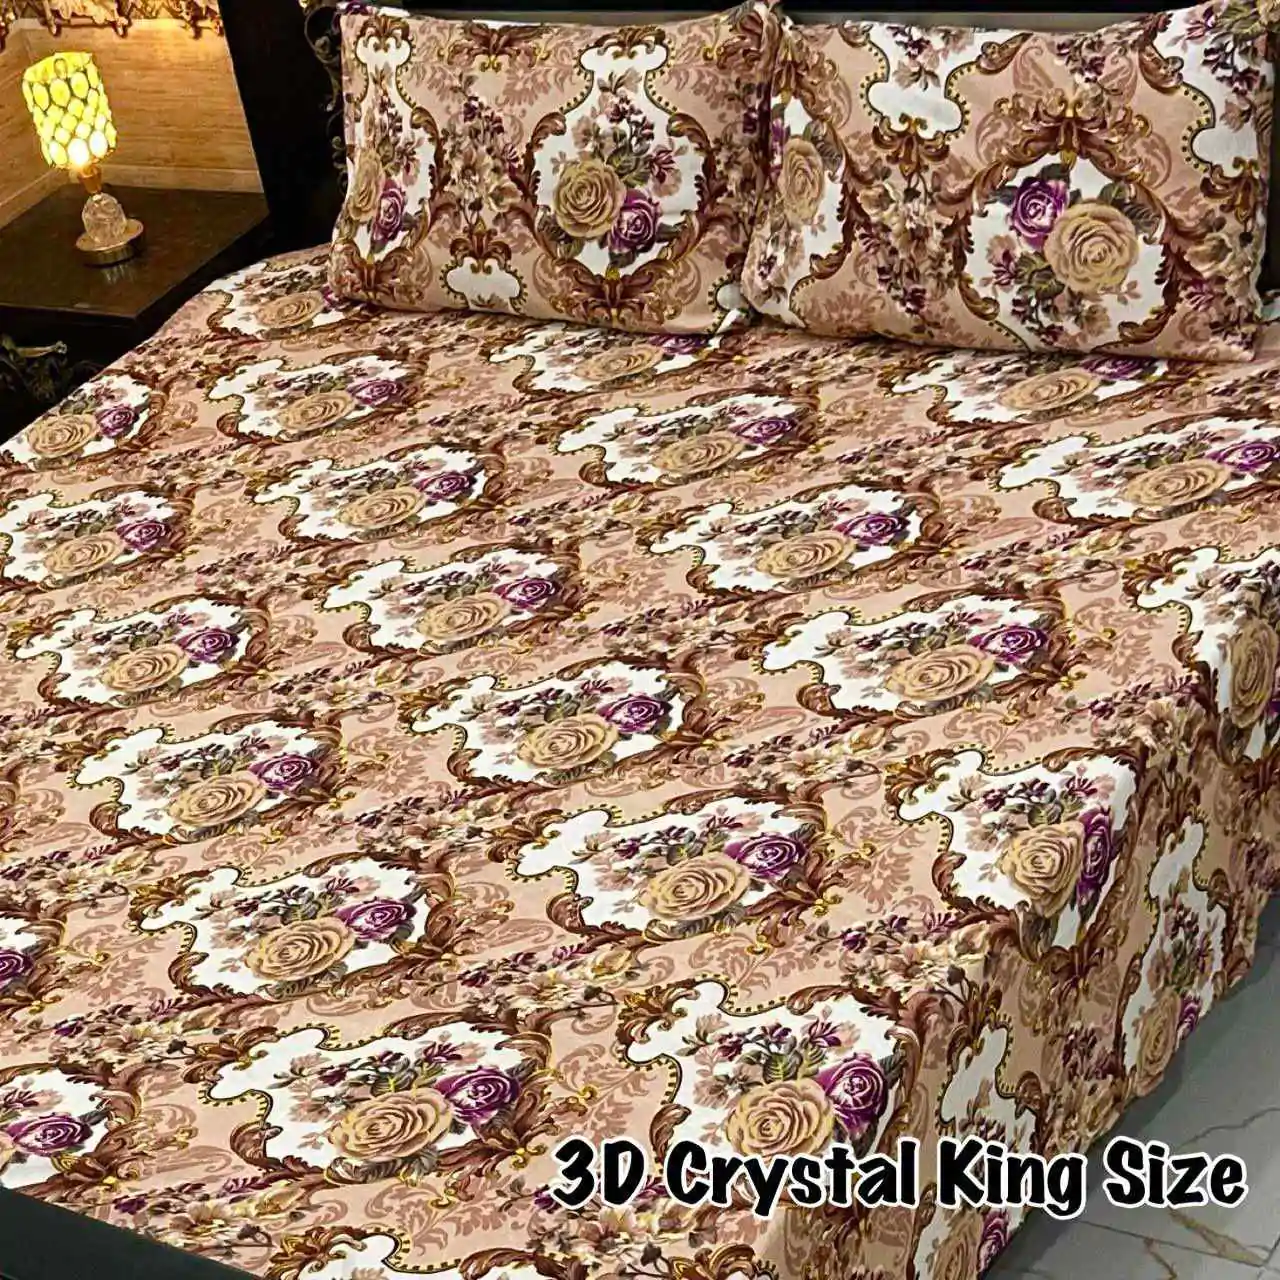 DF-CBSKS-14: DFY Bedding 3D Crystal Bed Sheet King Size